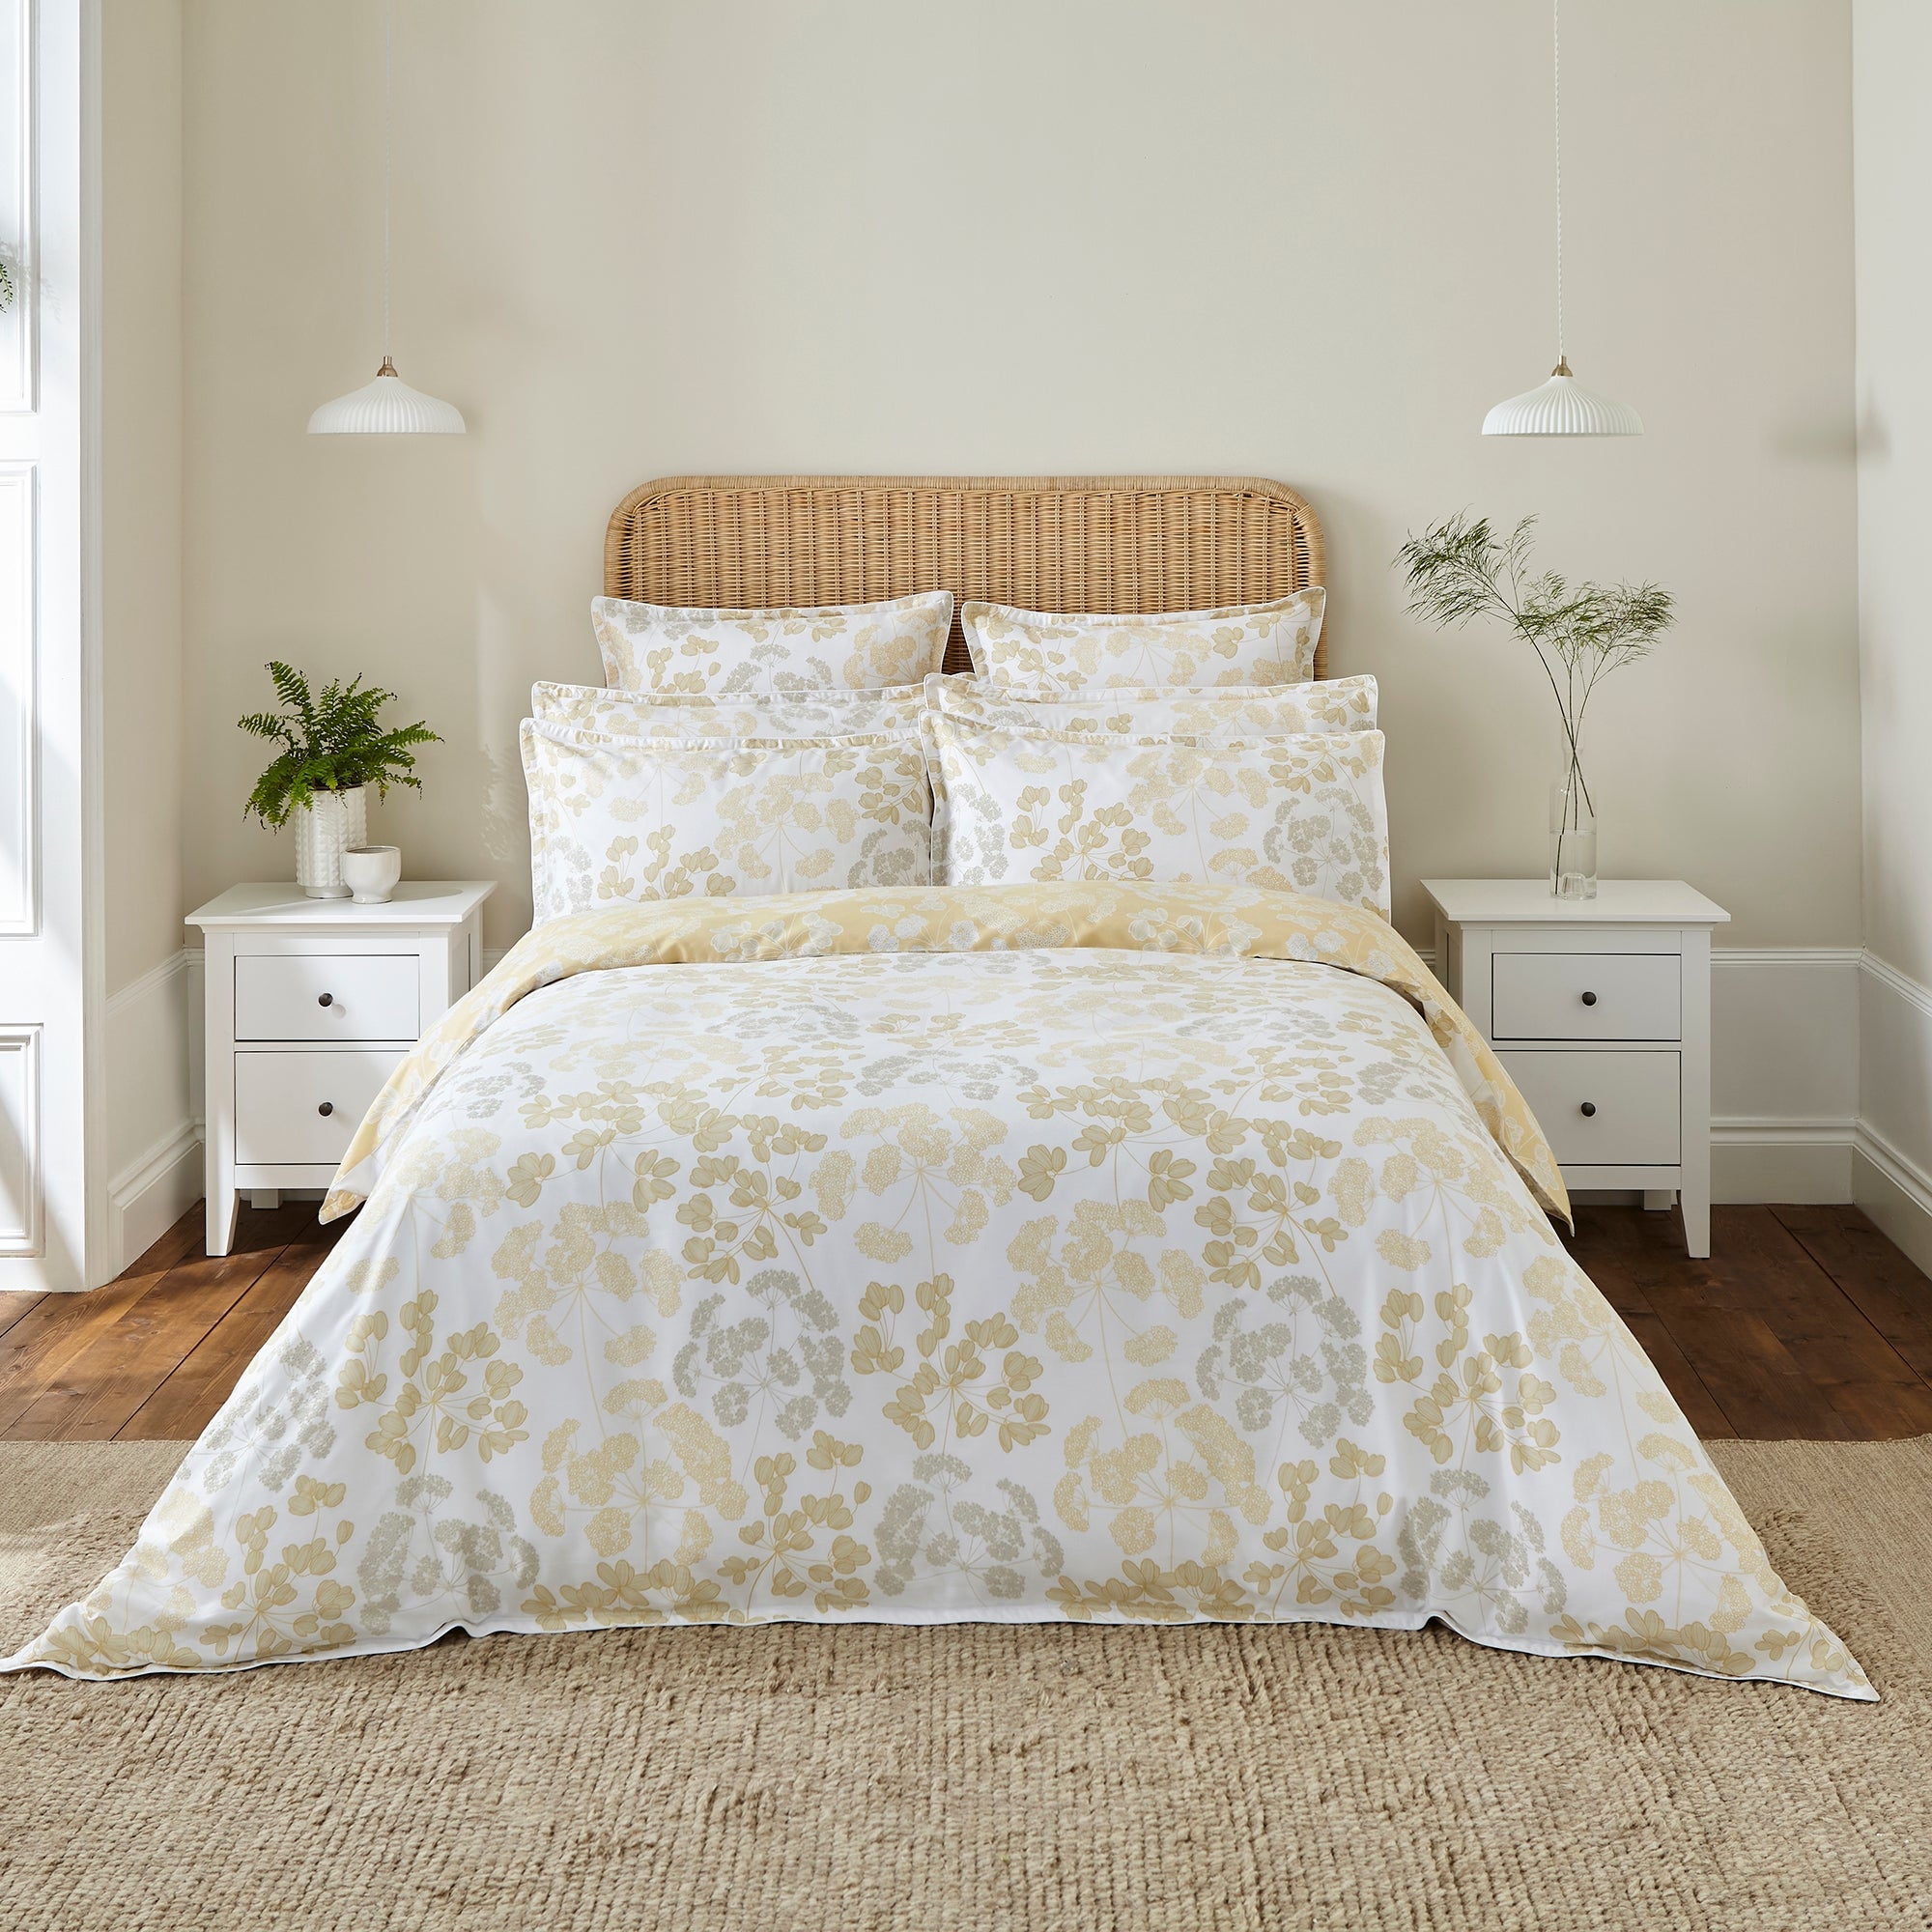 Dorma Daylesford 300 Thread Count Cotton Sateen Yellow Duvet Cover and Pillowcase Set white